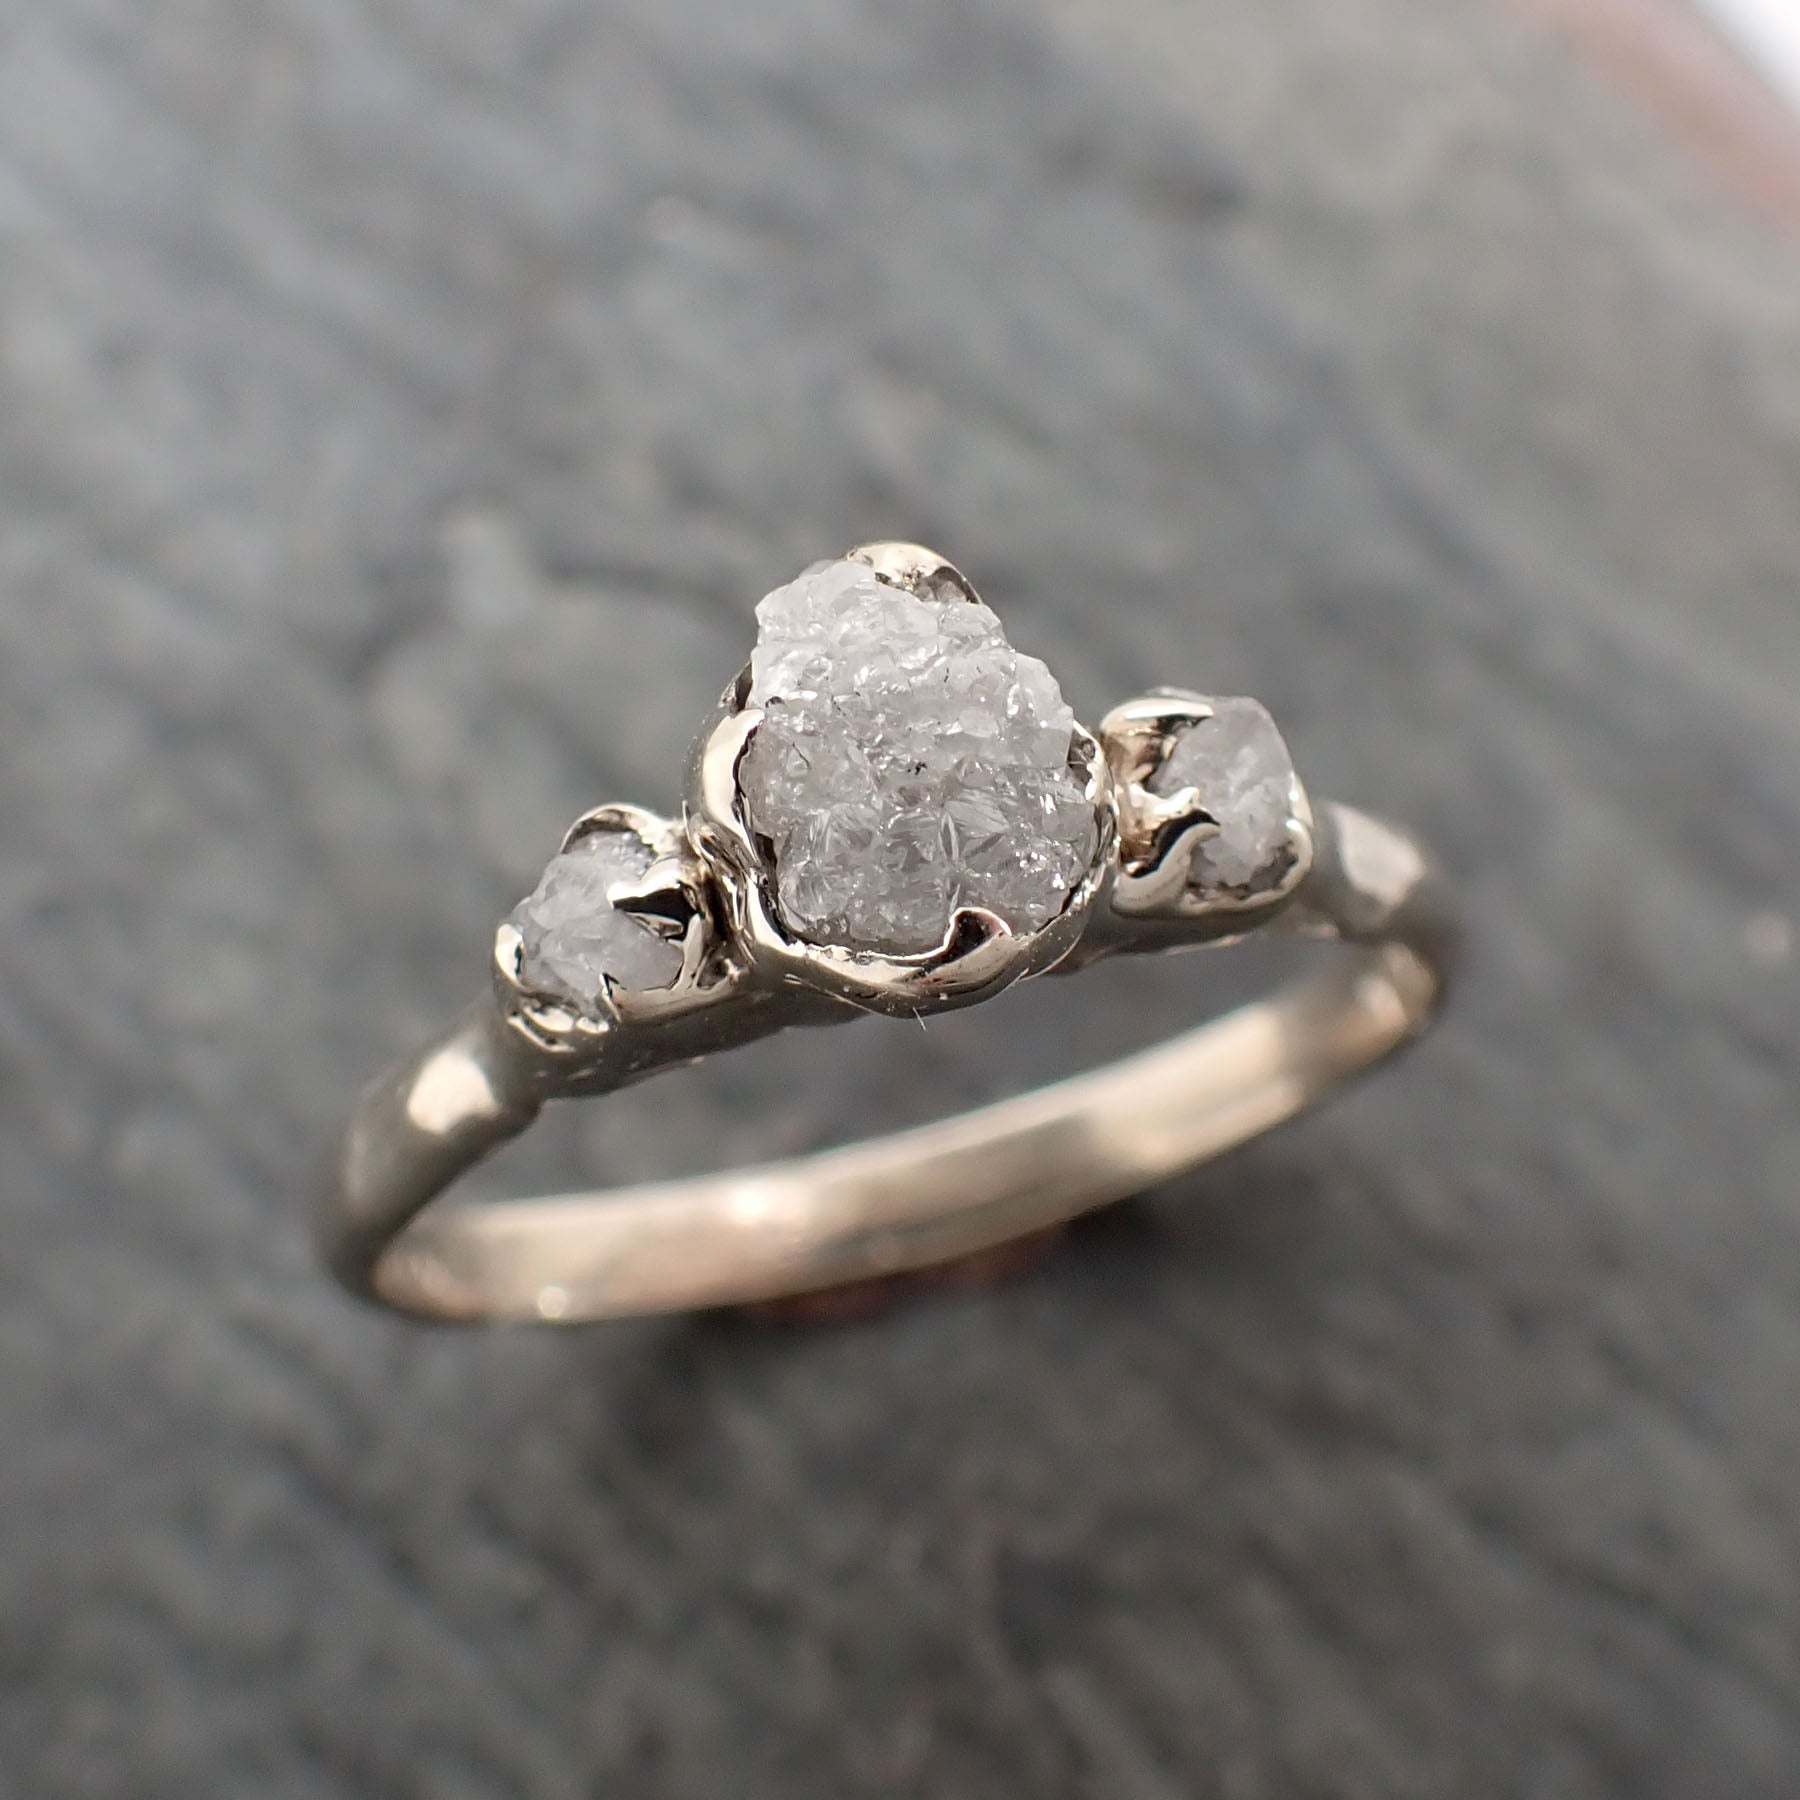 raw rough diamond engagement stacking ring multi stone wedding anniversary white gold 14k rustic byangeline 2363 Alternative Engagement